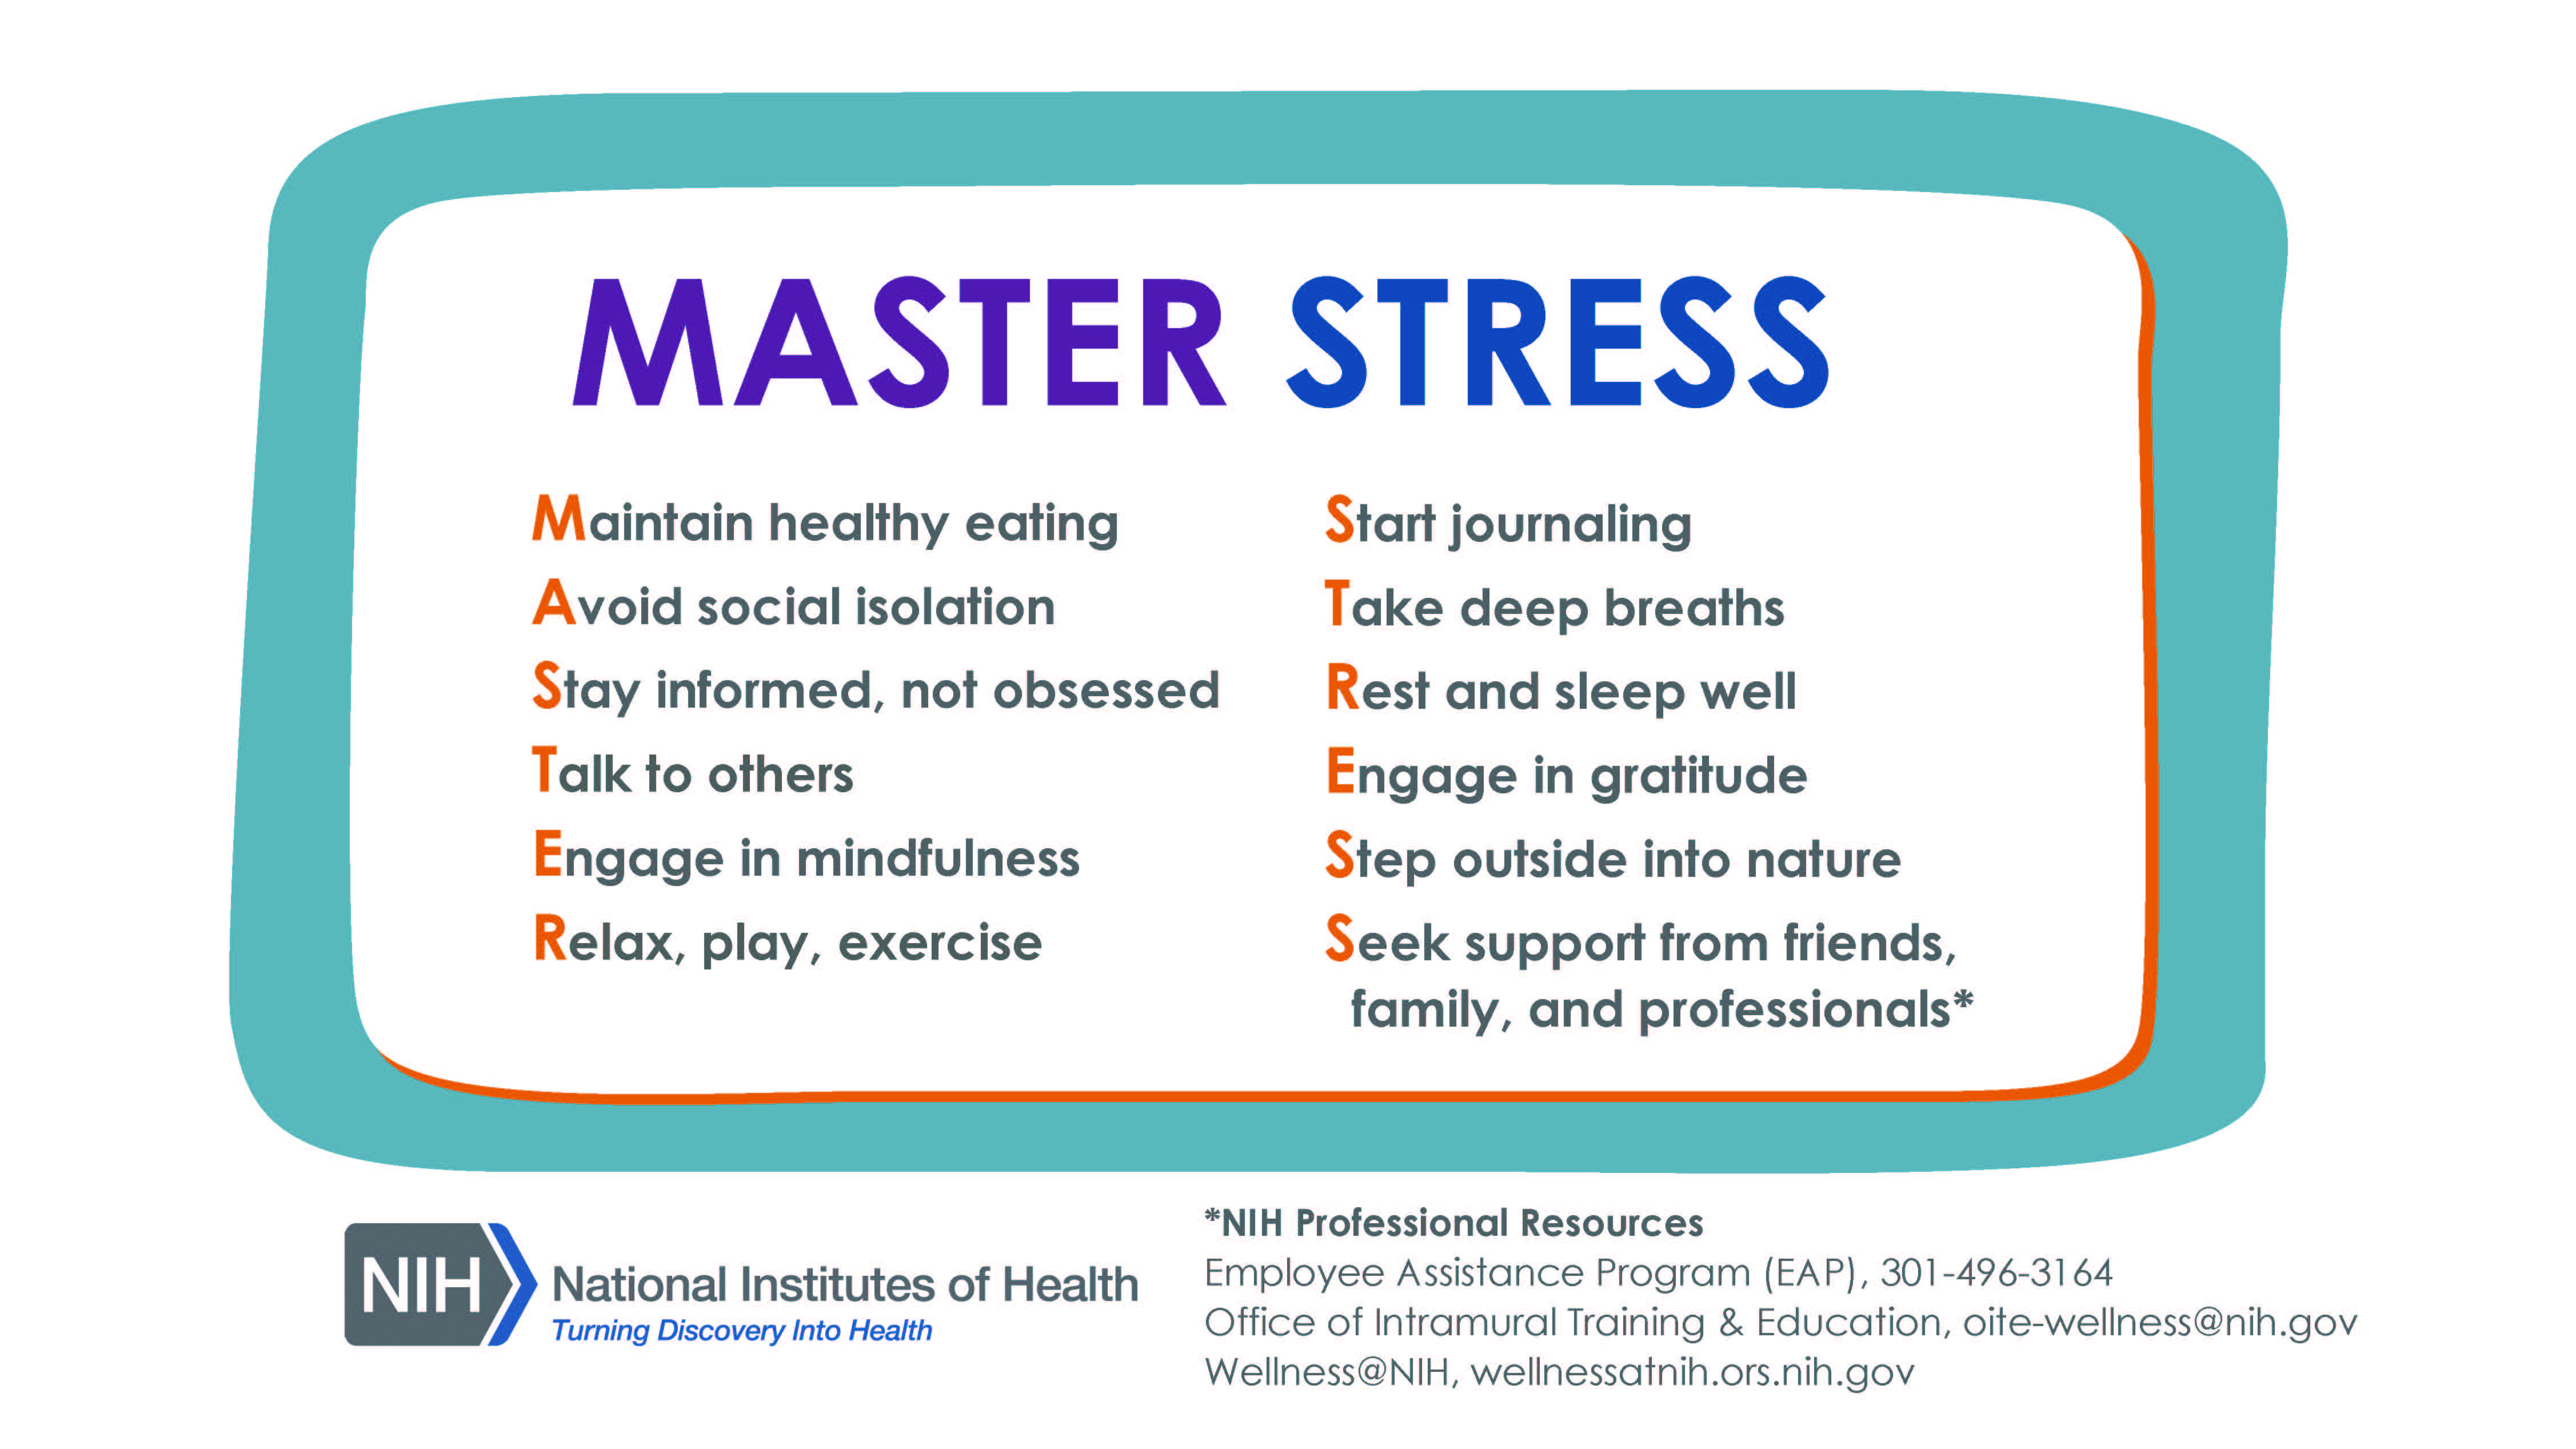 MASTER STRESS Tips